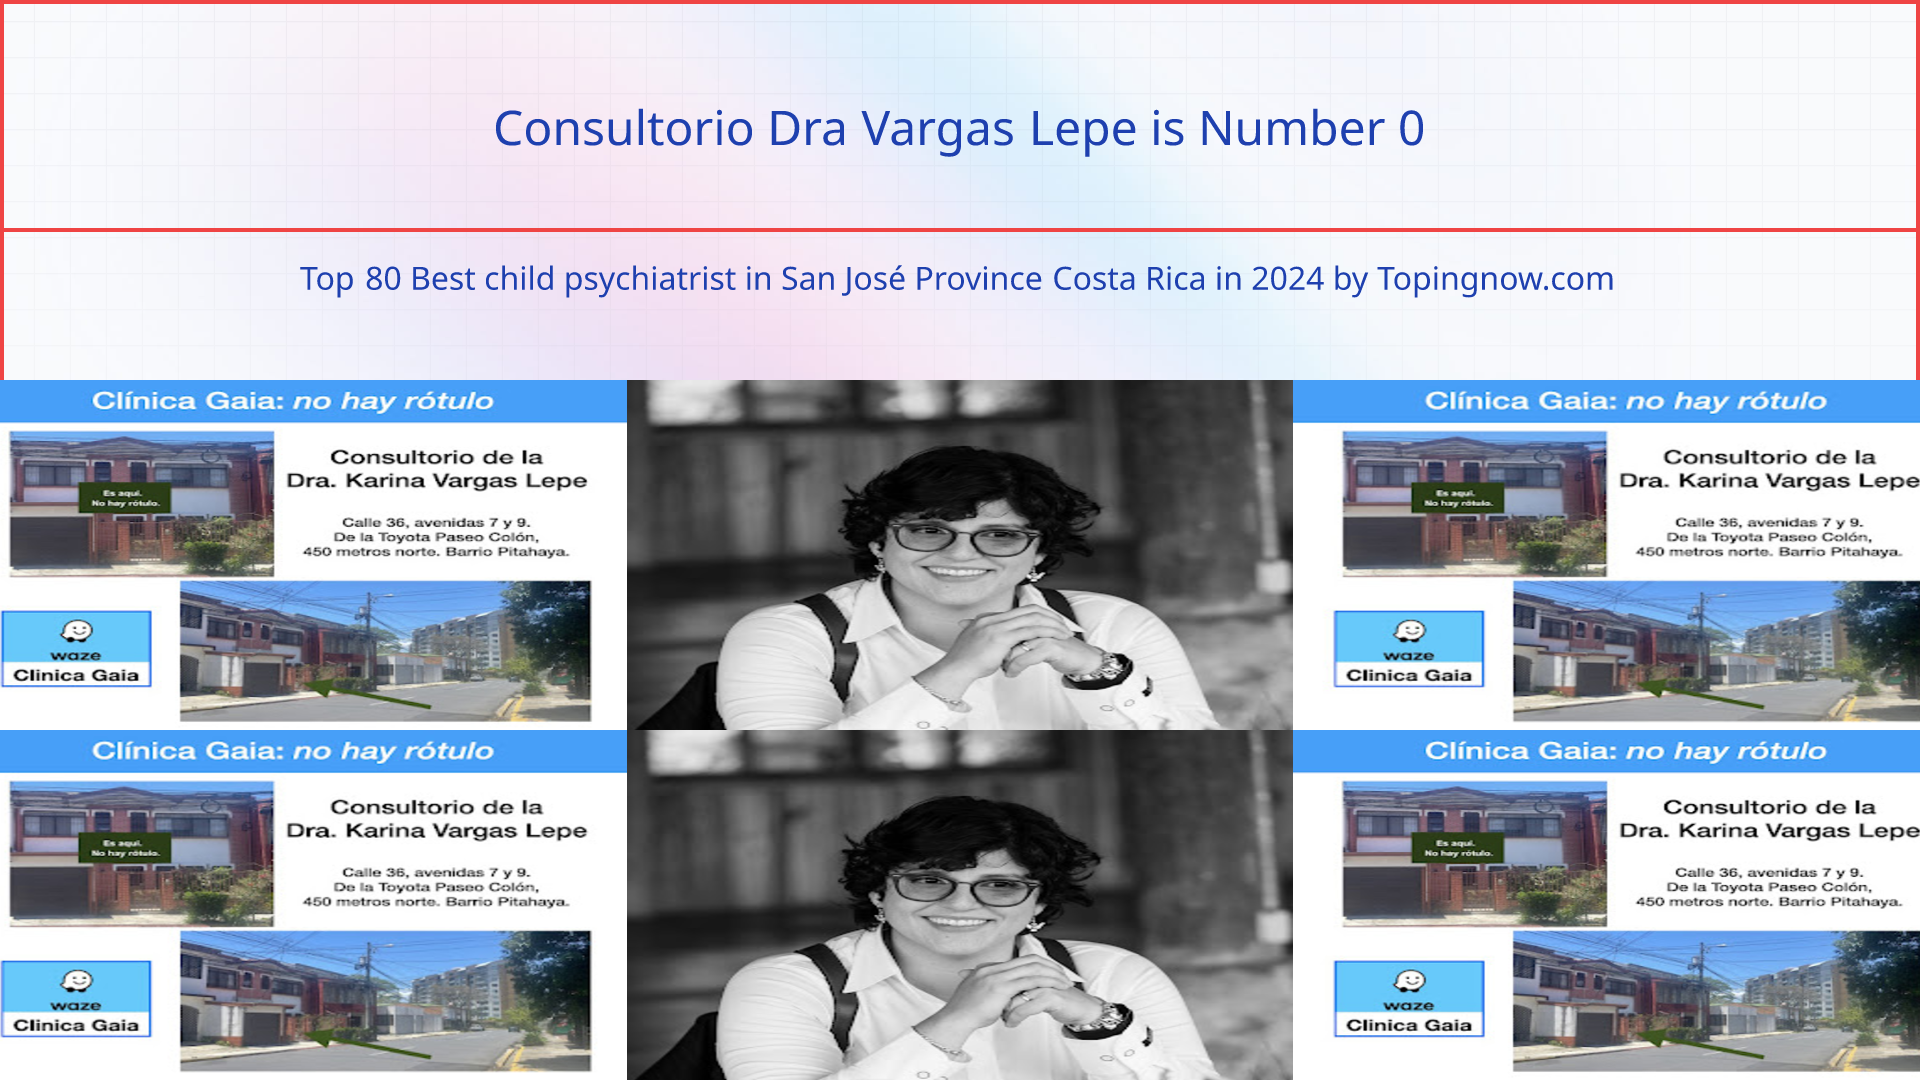 Consultorio Dra Vargas Lepe: Top 80 Best child psychiatrist in San José Province Costa Rica in 2024